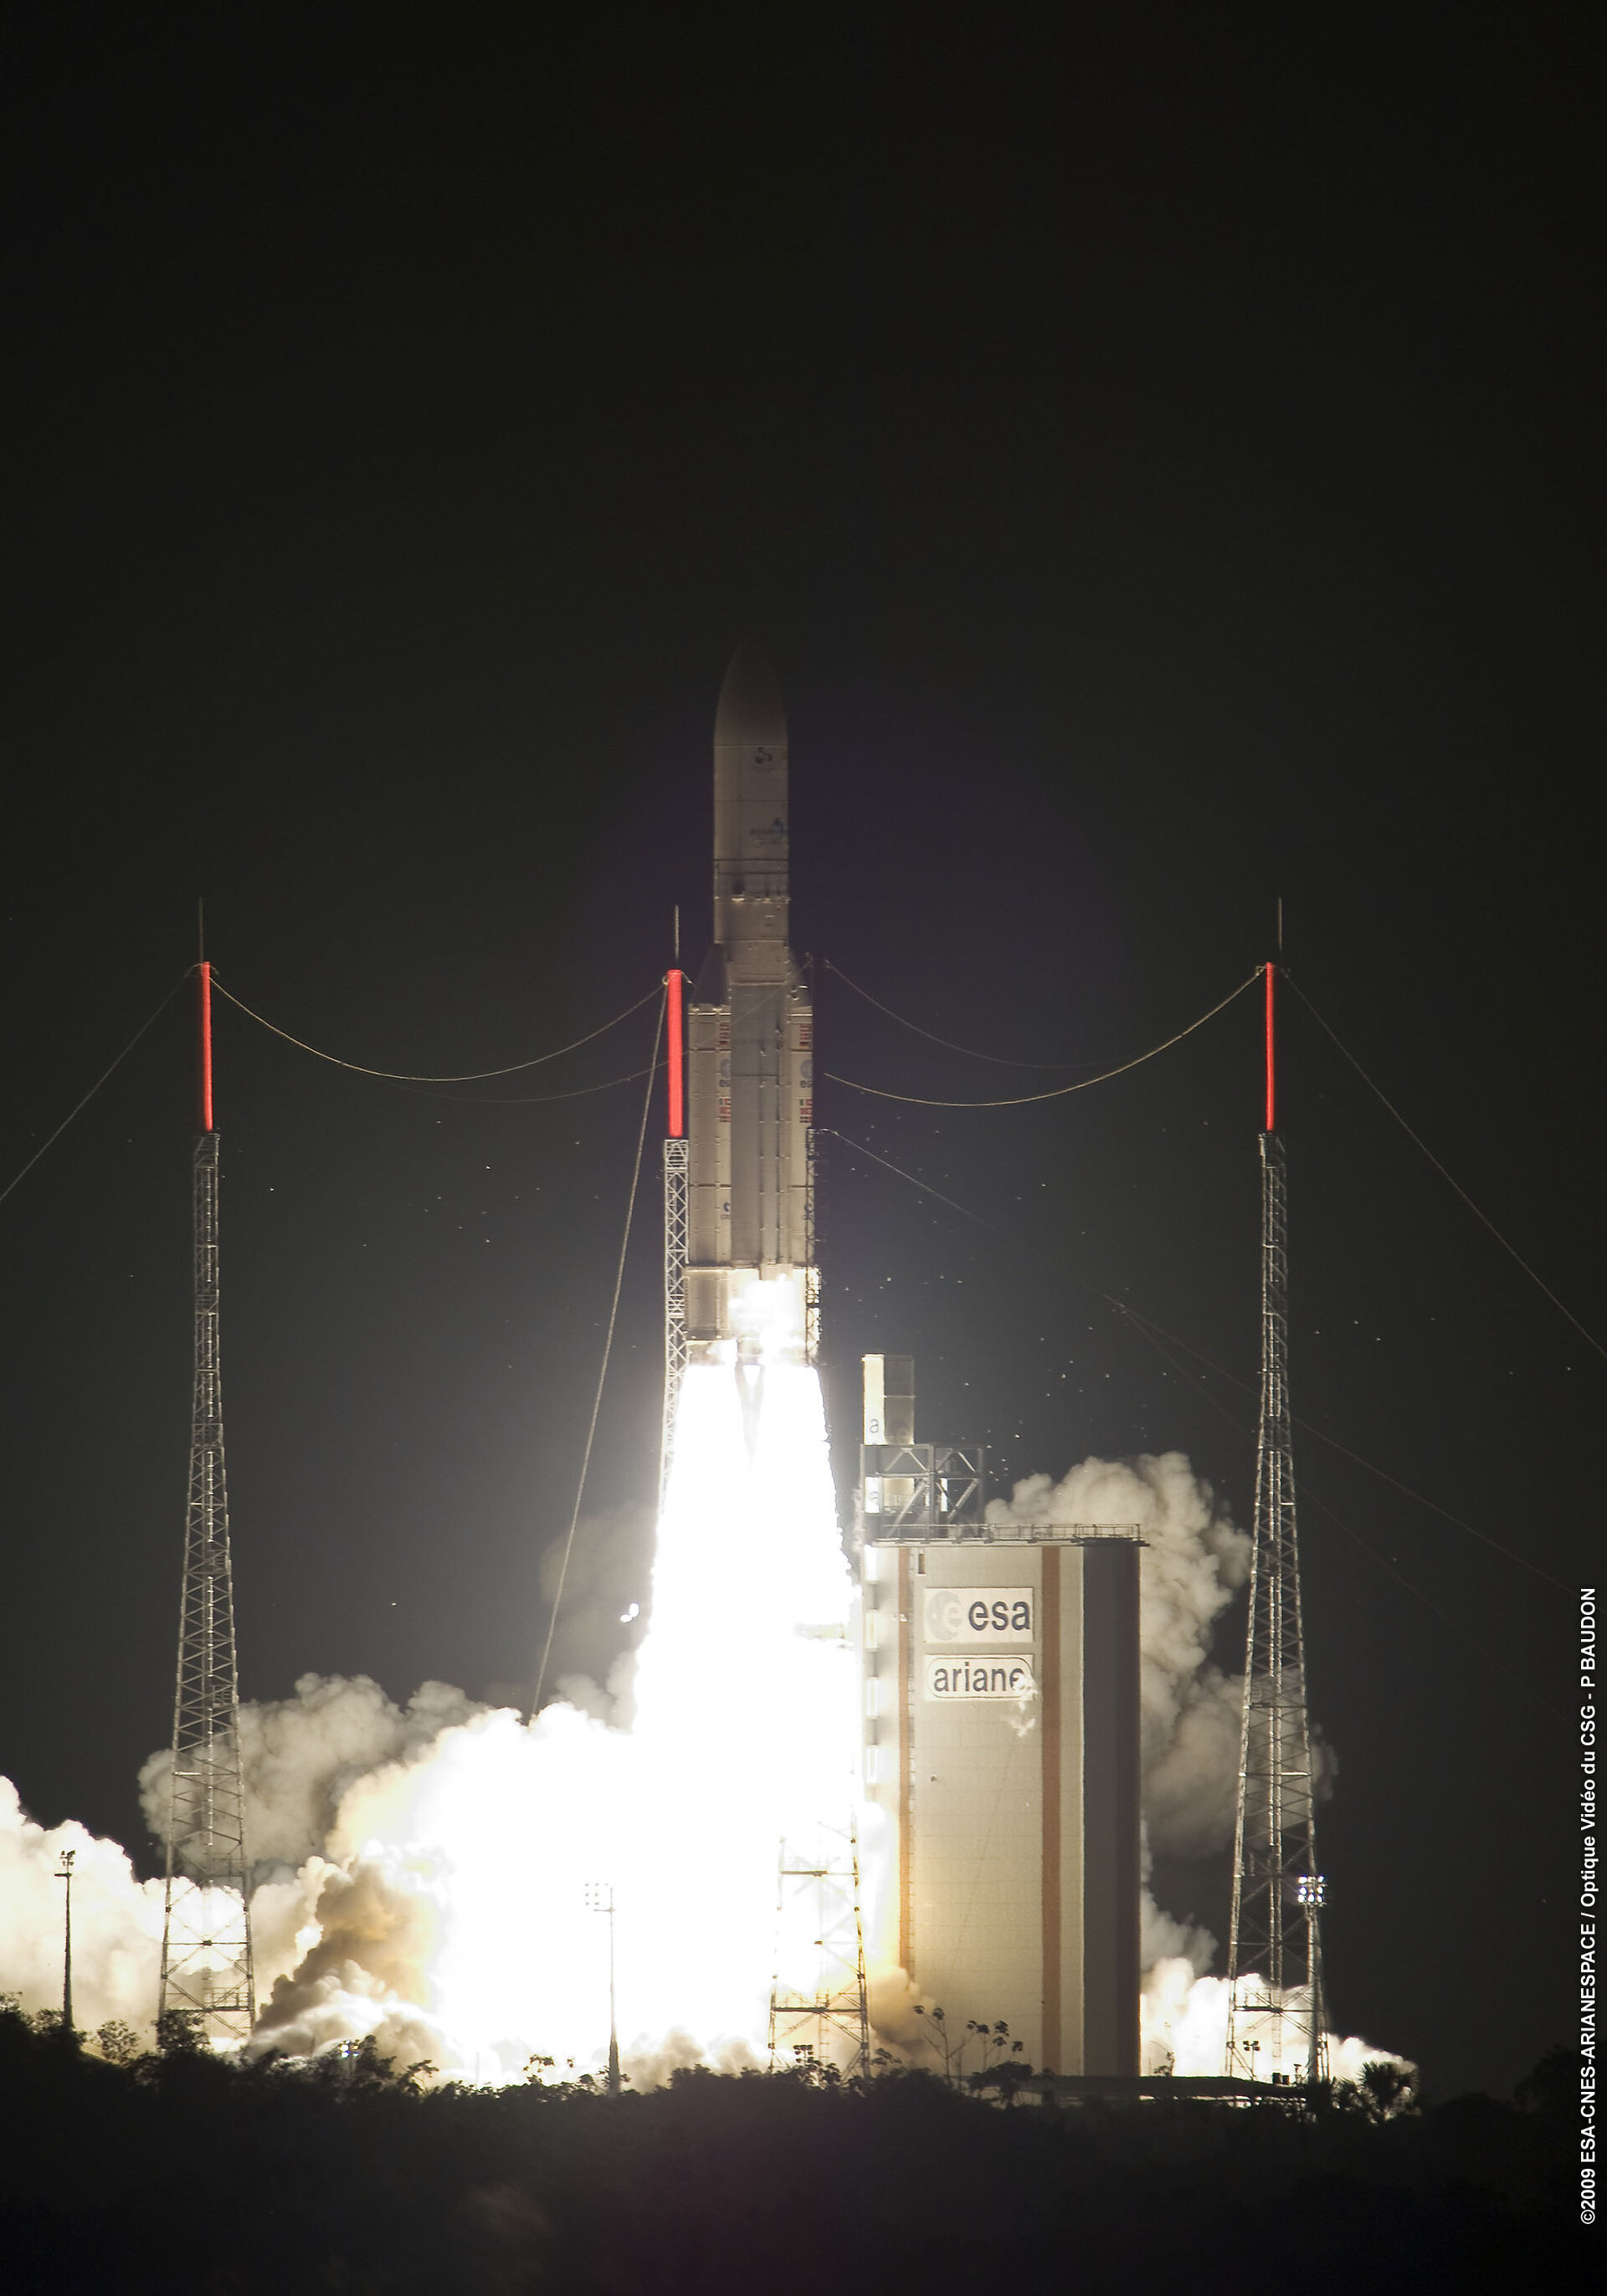 Ariane 5 flight V190 liftoff